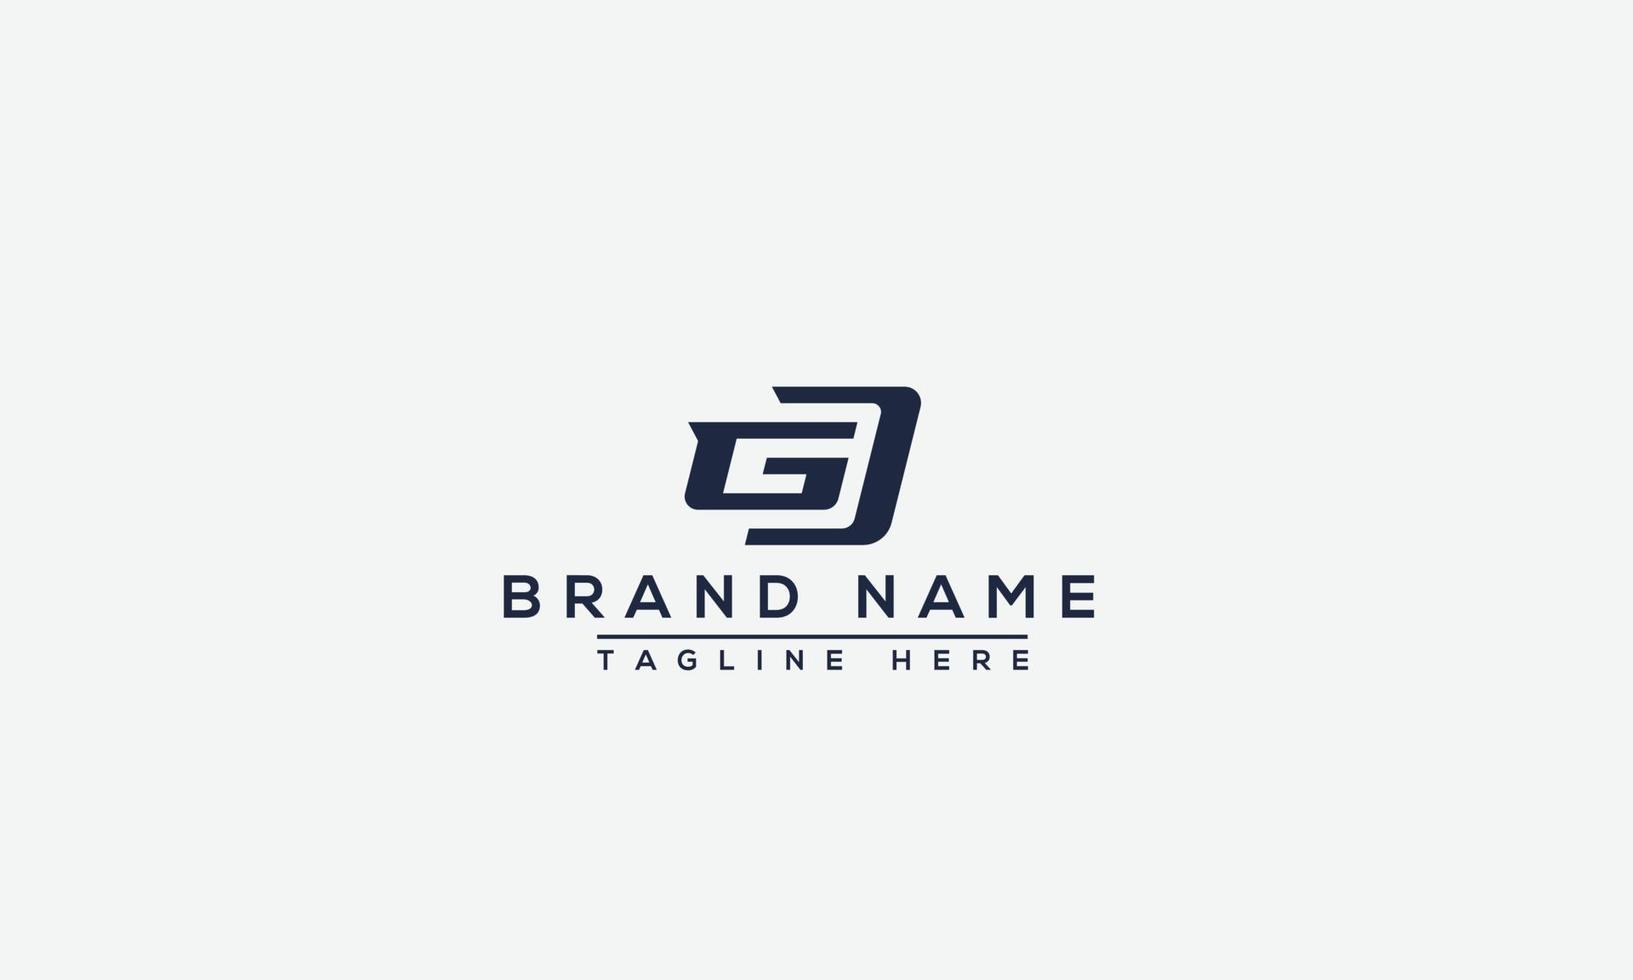 GD Logo Design Template Vector Graphic Branding Element.